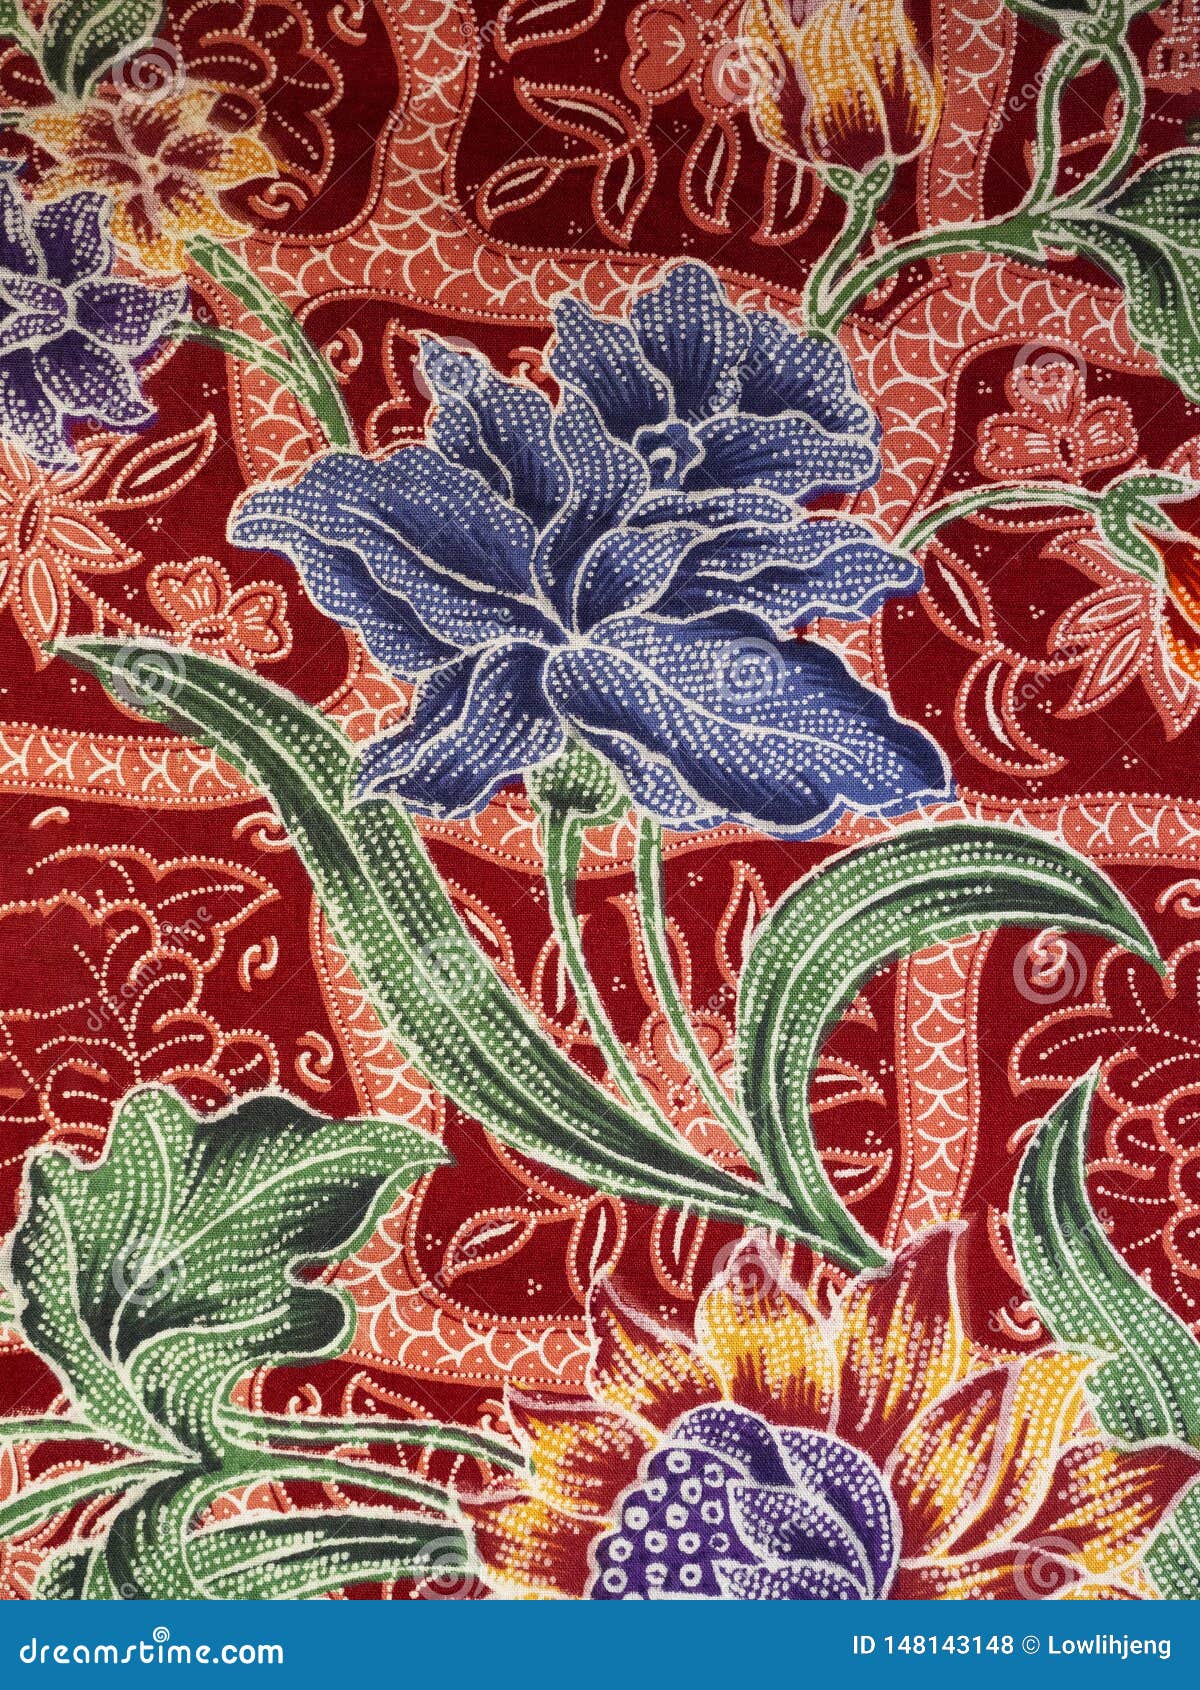  Batik  Pattern Solo  Indonesia Stock Photo Image of leaf 